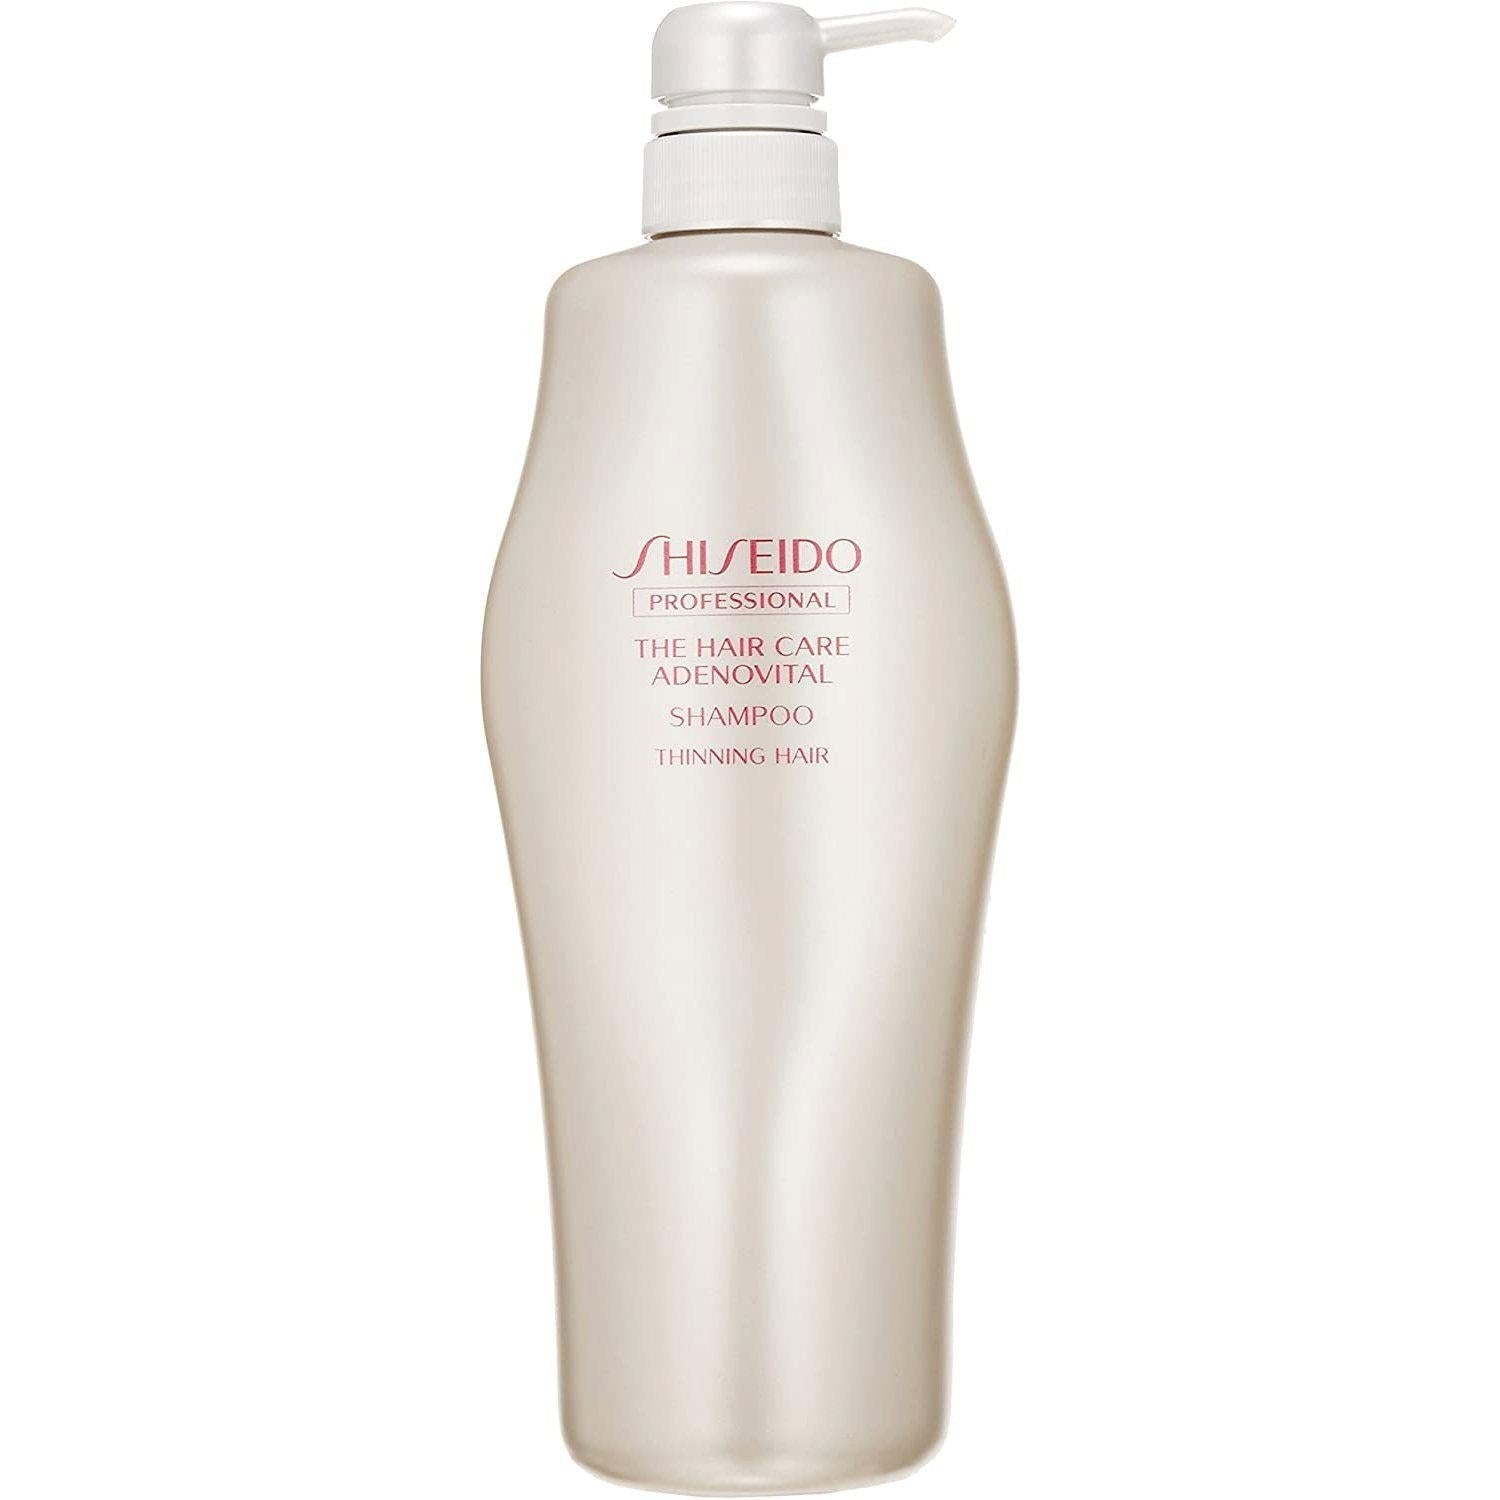 P-1-ADNO-SCASHA-1000-Shiseido Professional Adenovital Shampoo for Thinning Hair 1000ml.jpg